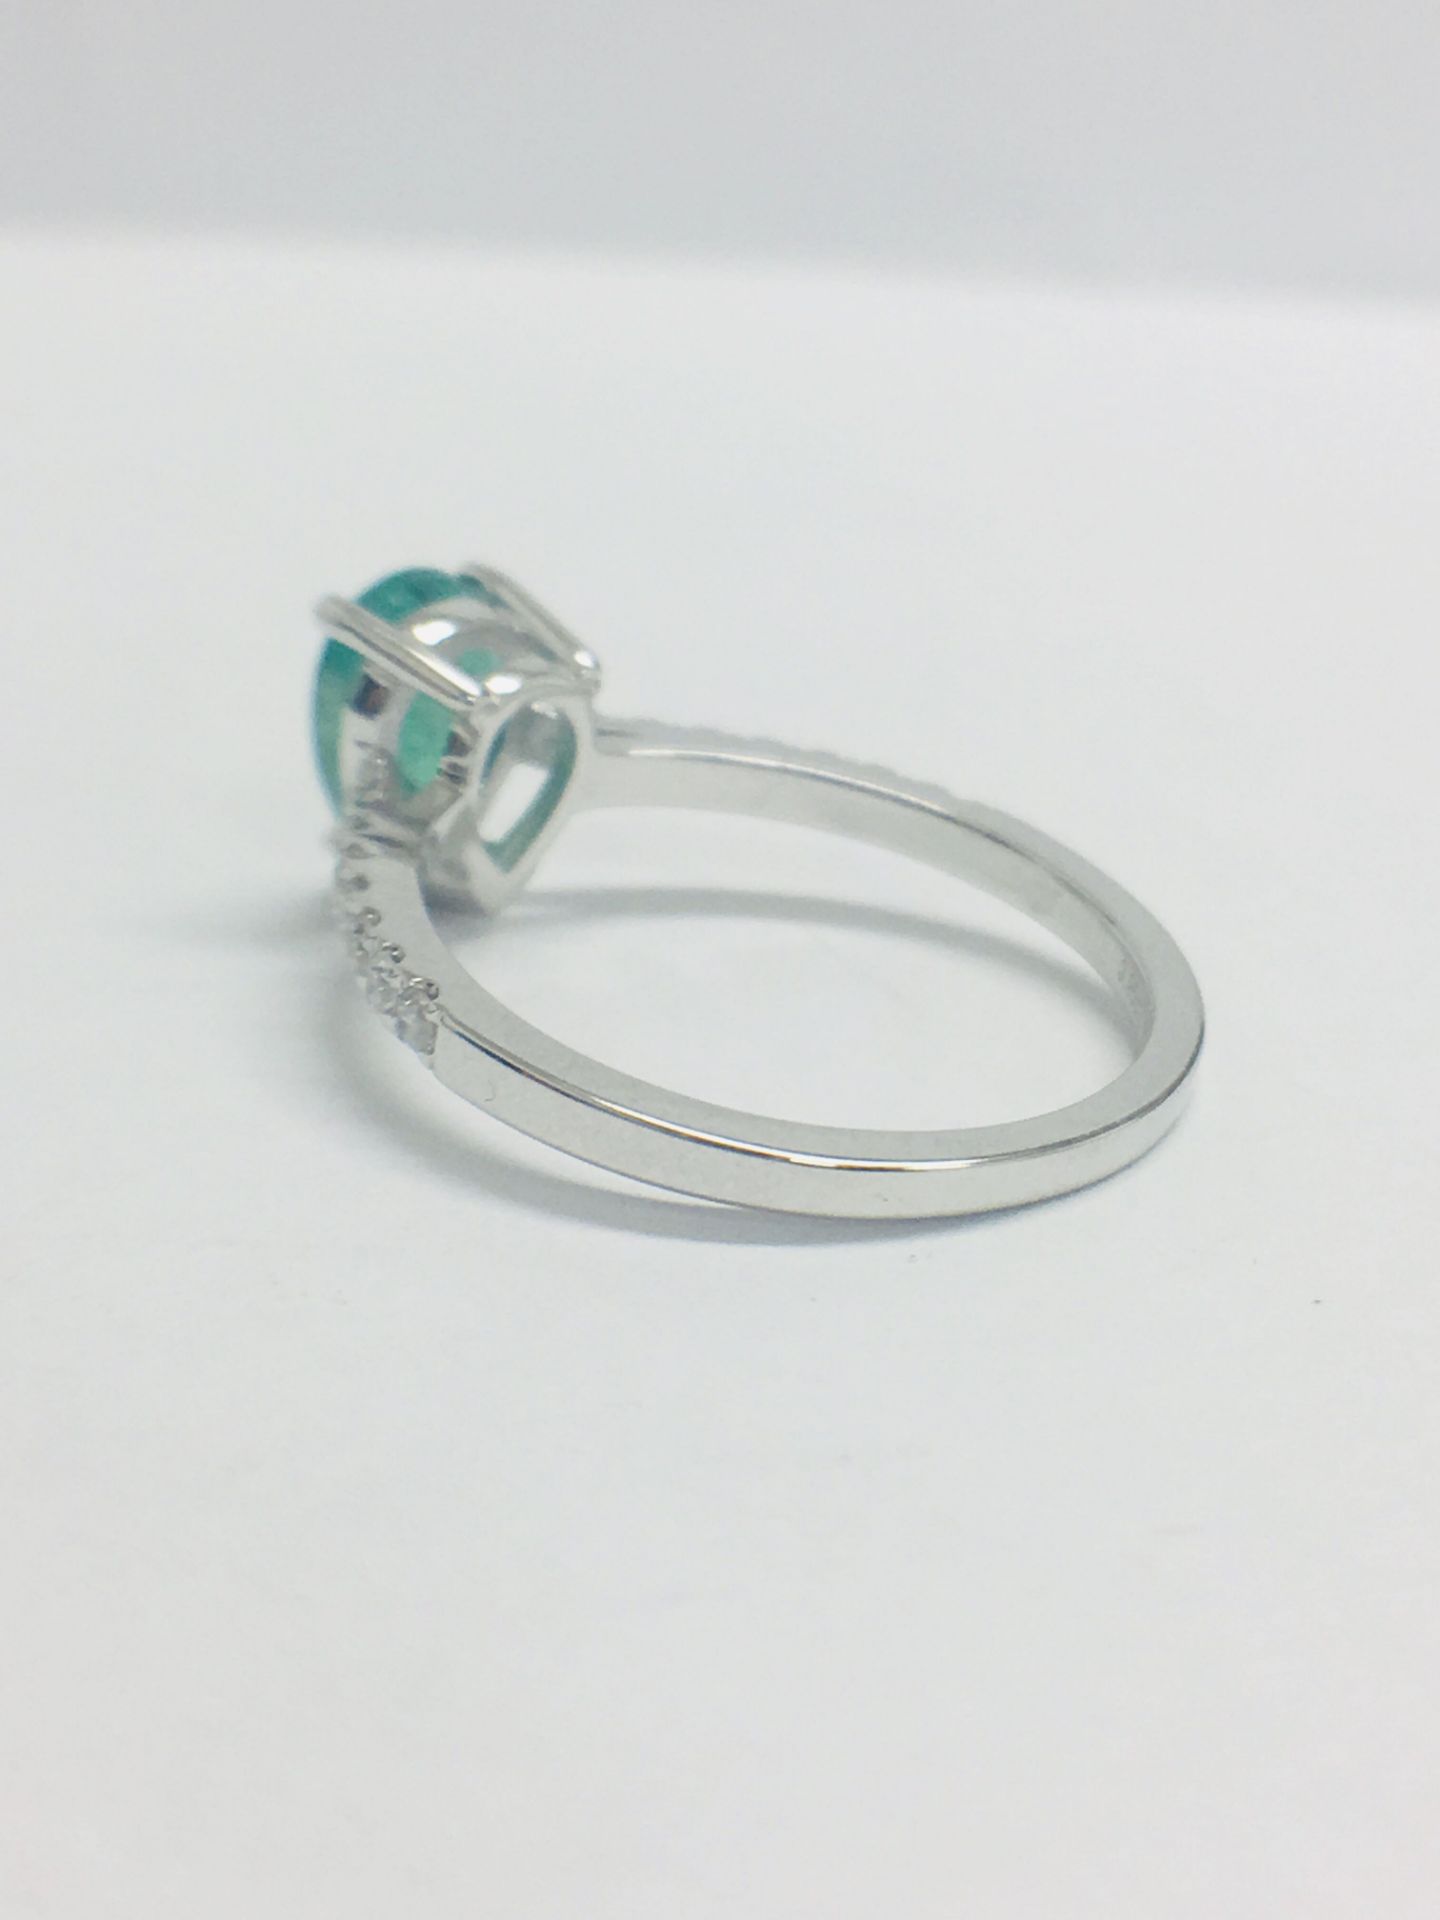 14ct White Gold Emerald & Diamond Ring - Image 5 of 7